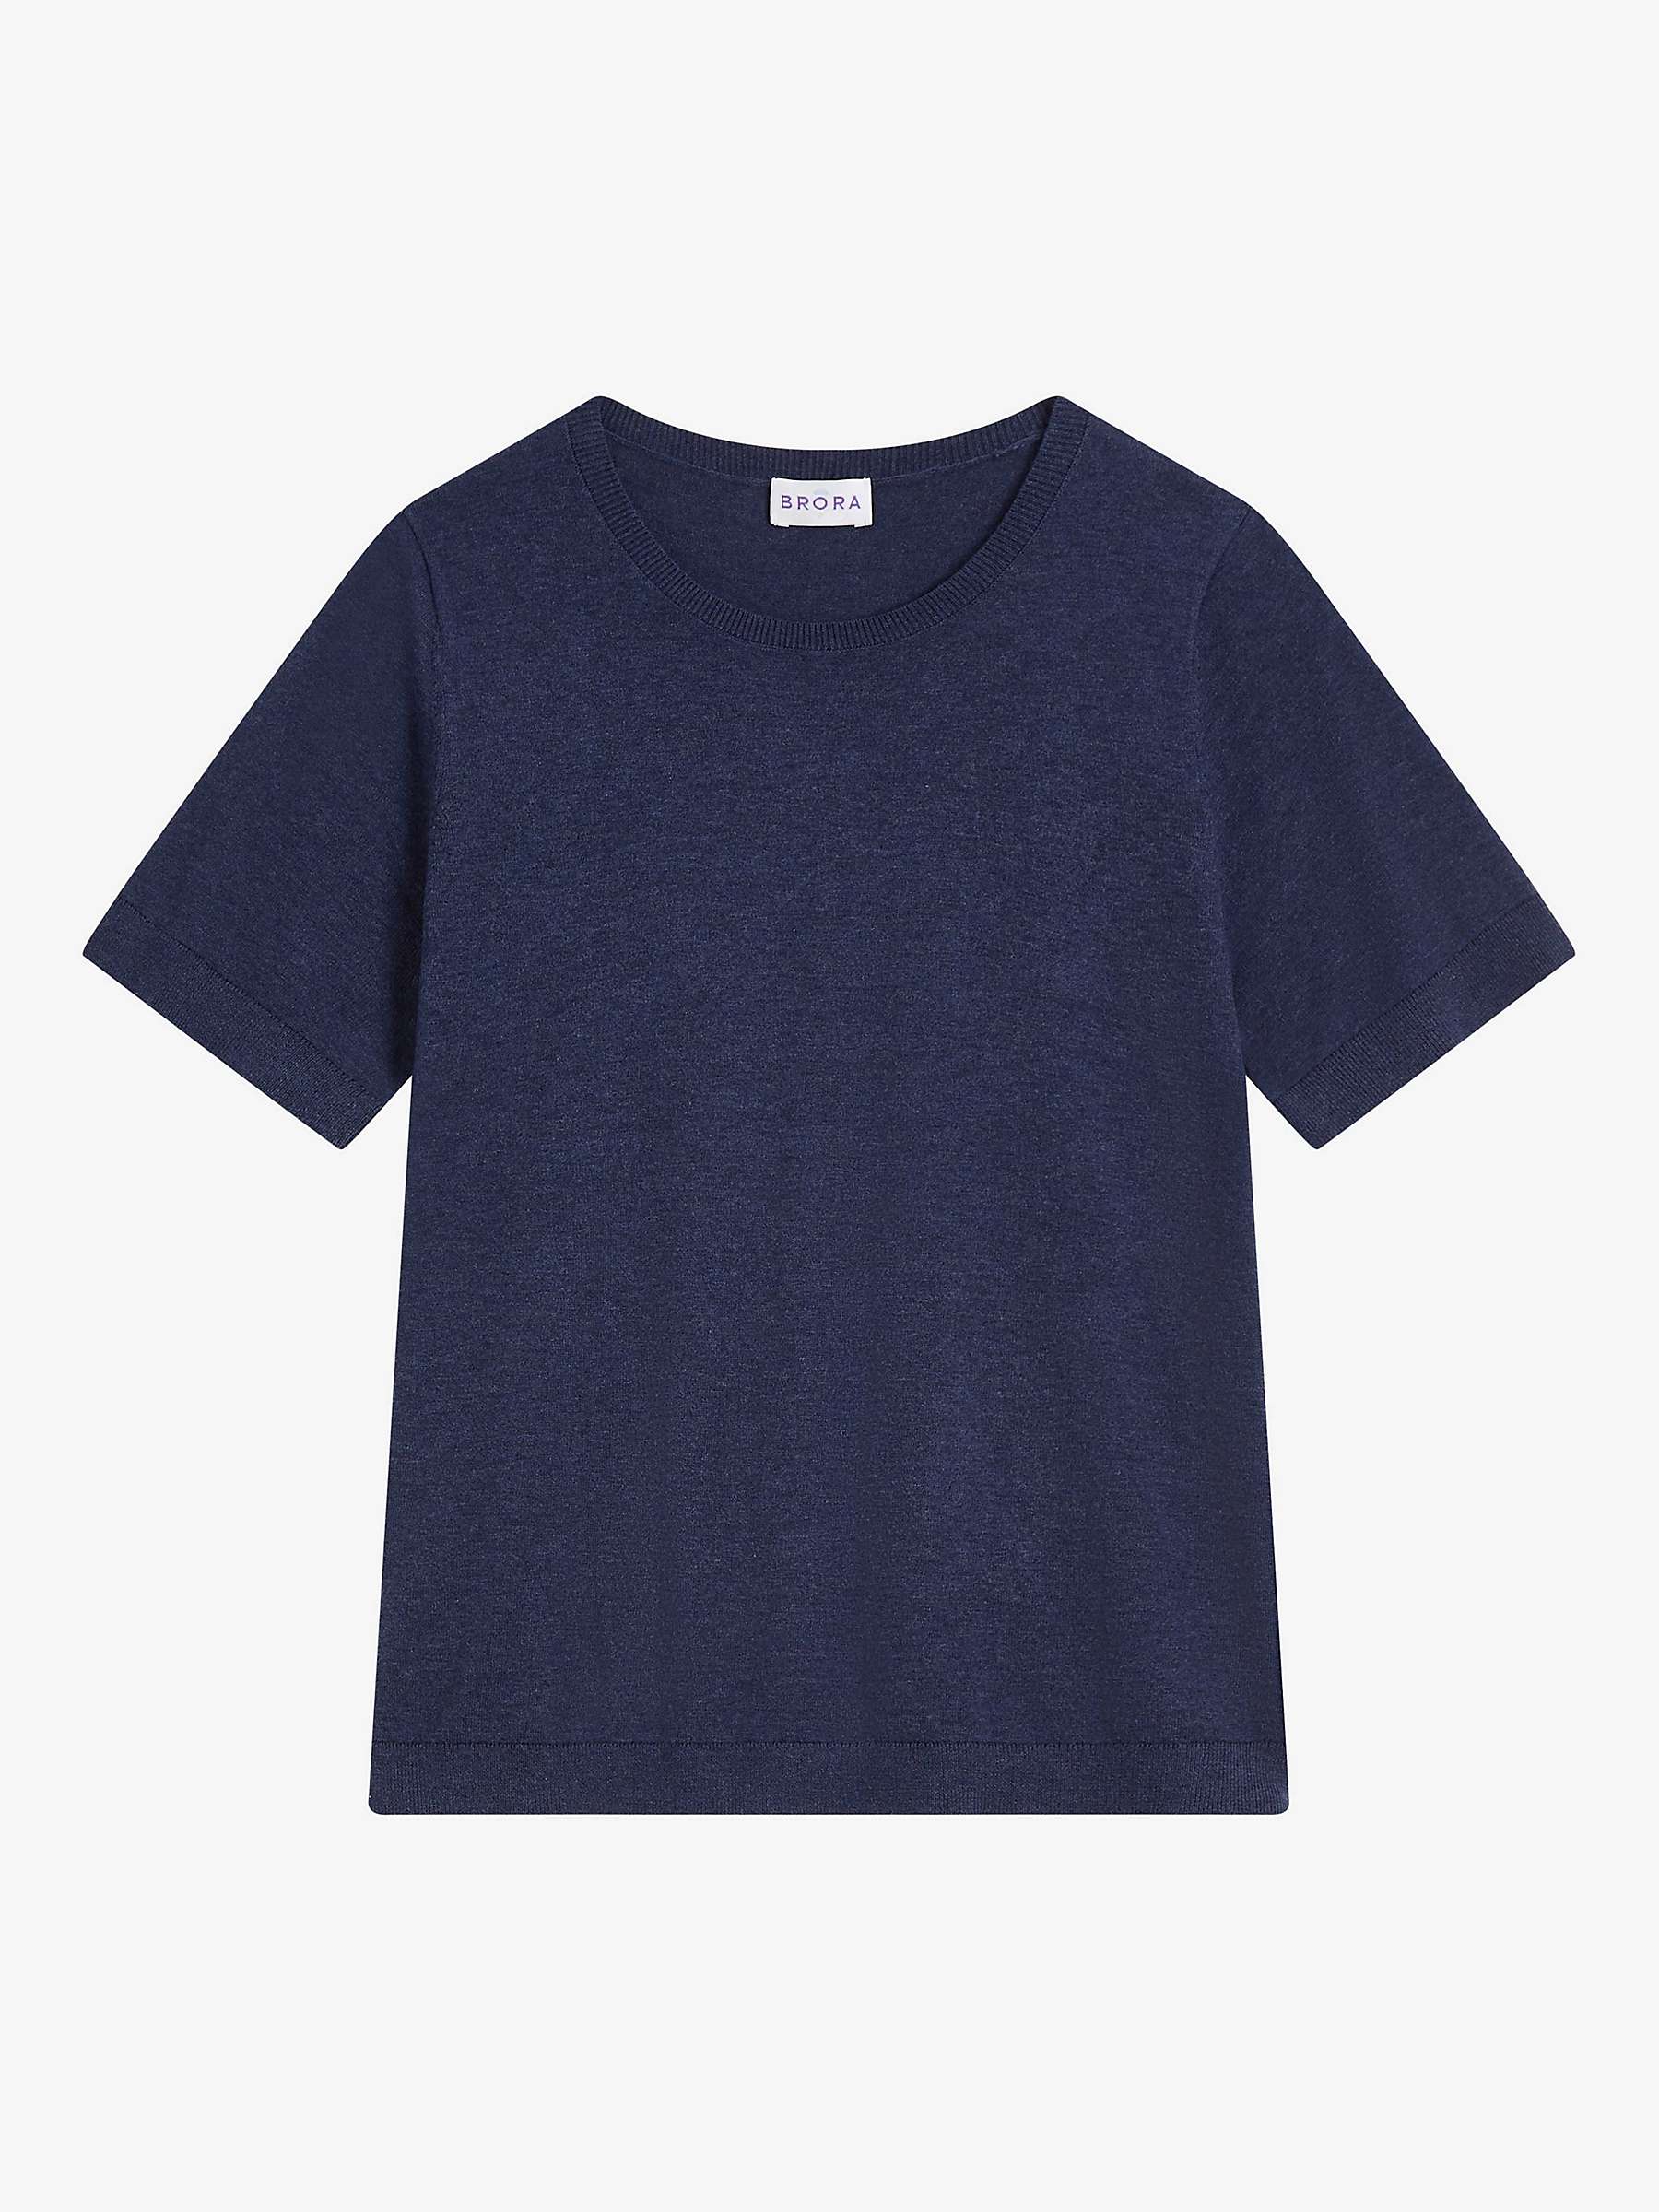 Buy Brora Cotton Knit Classic Crew T-Shirt Online at johnlewis.com